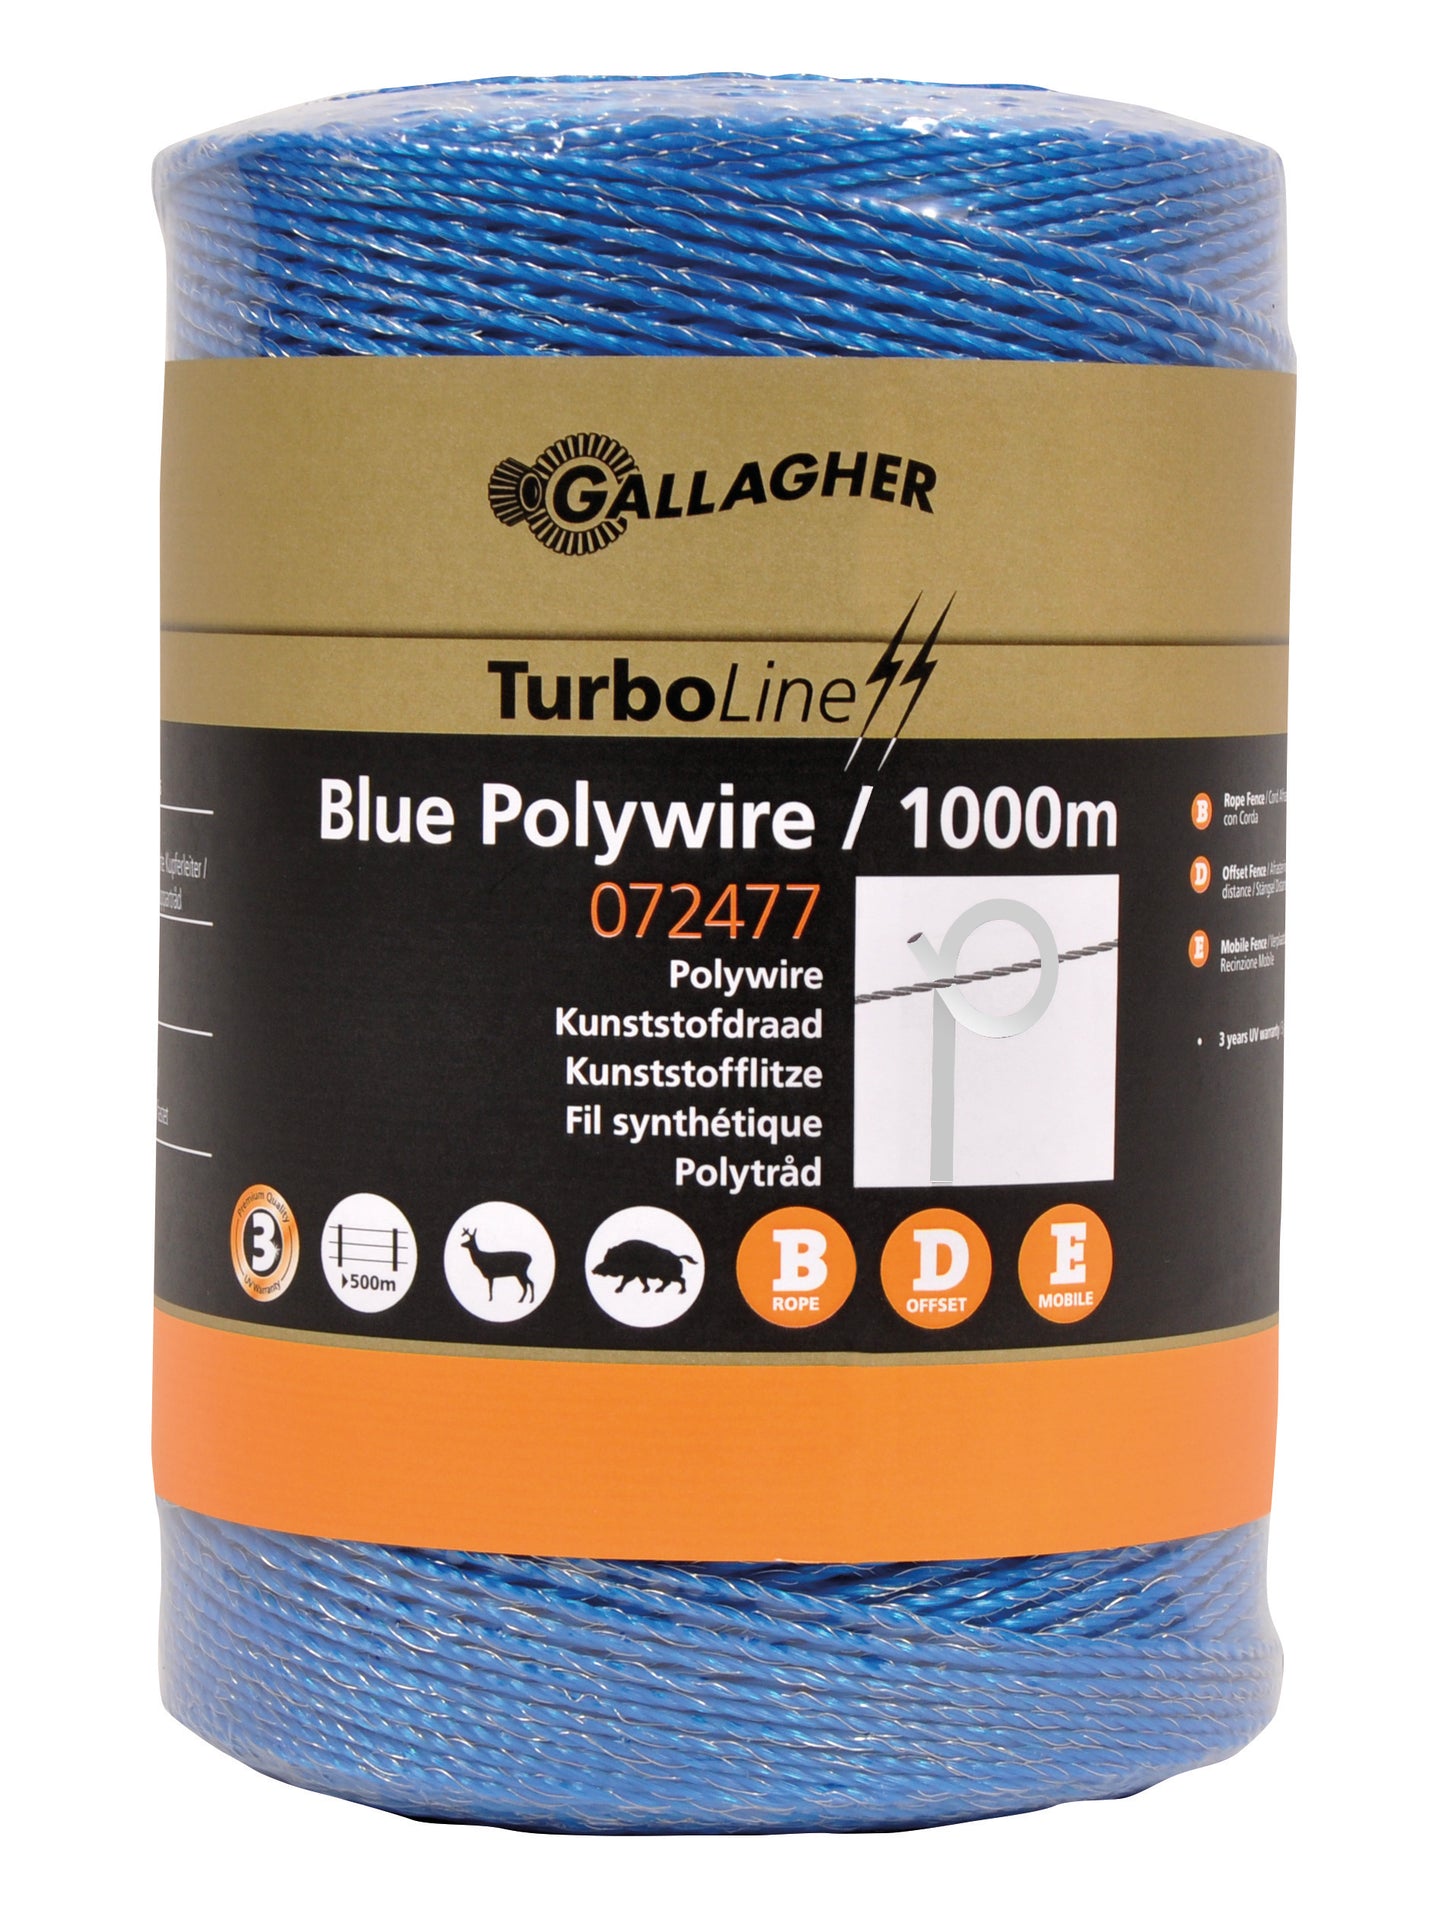 TurboLine Blue Polywire 1000m